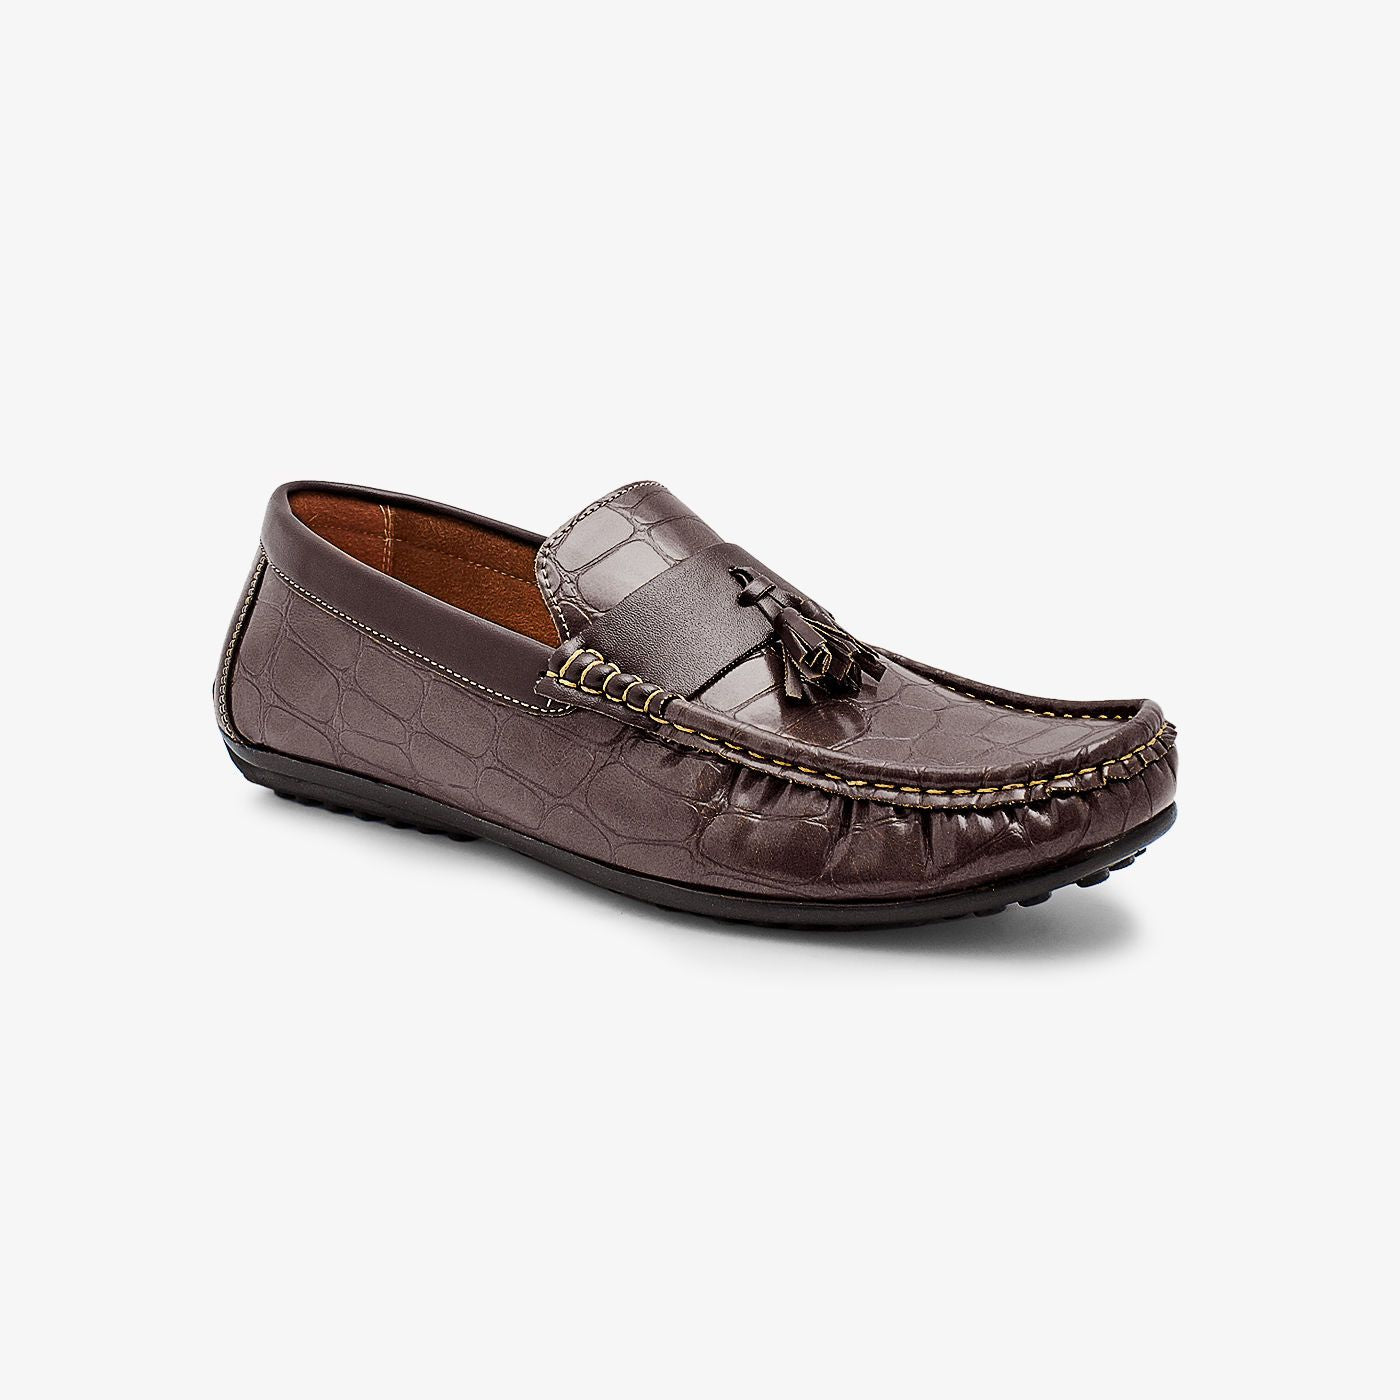 Buy Mens Tassled Loafers – Ndure.com